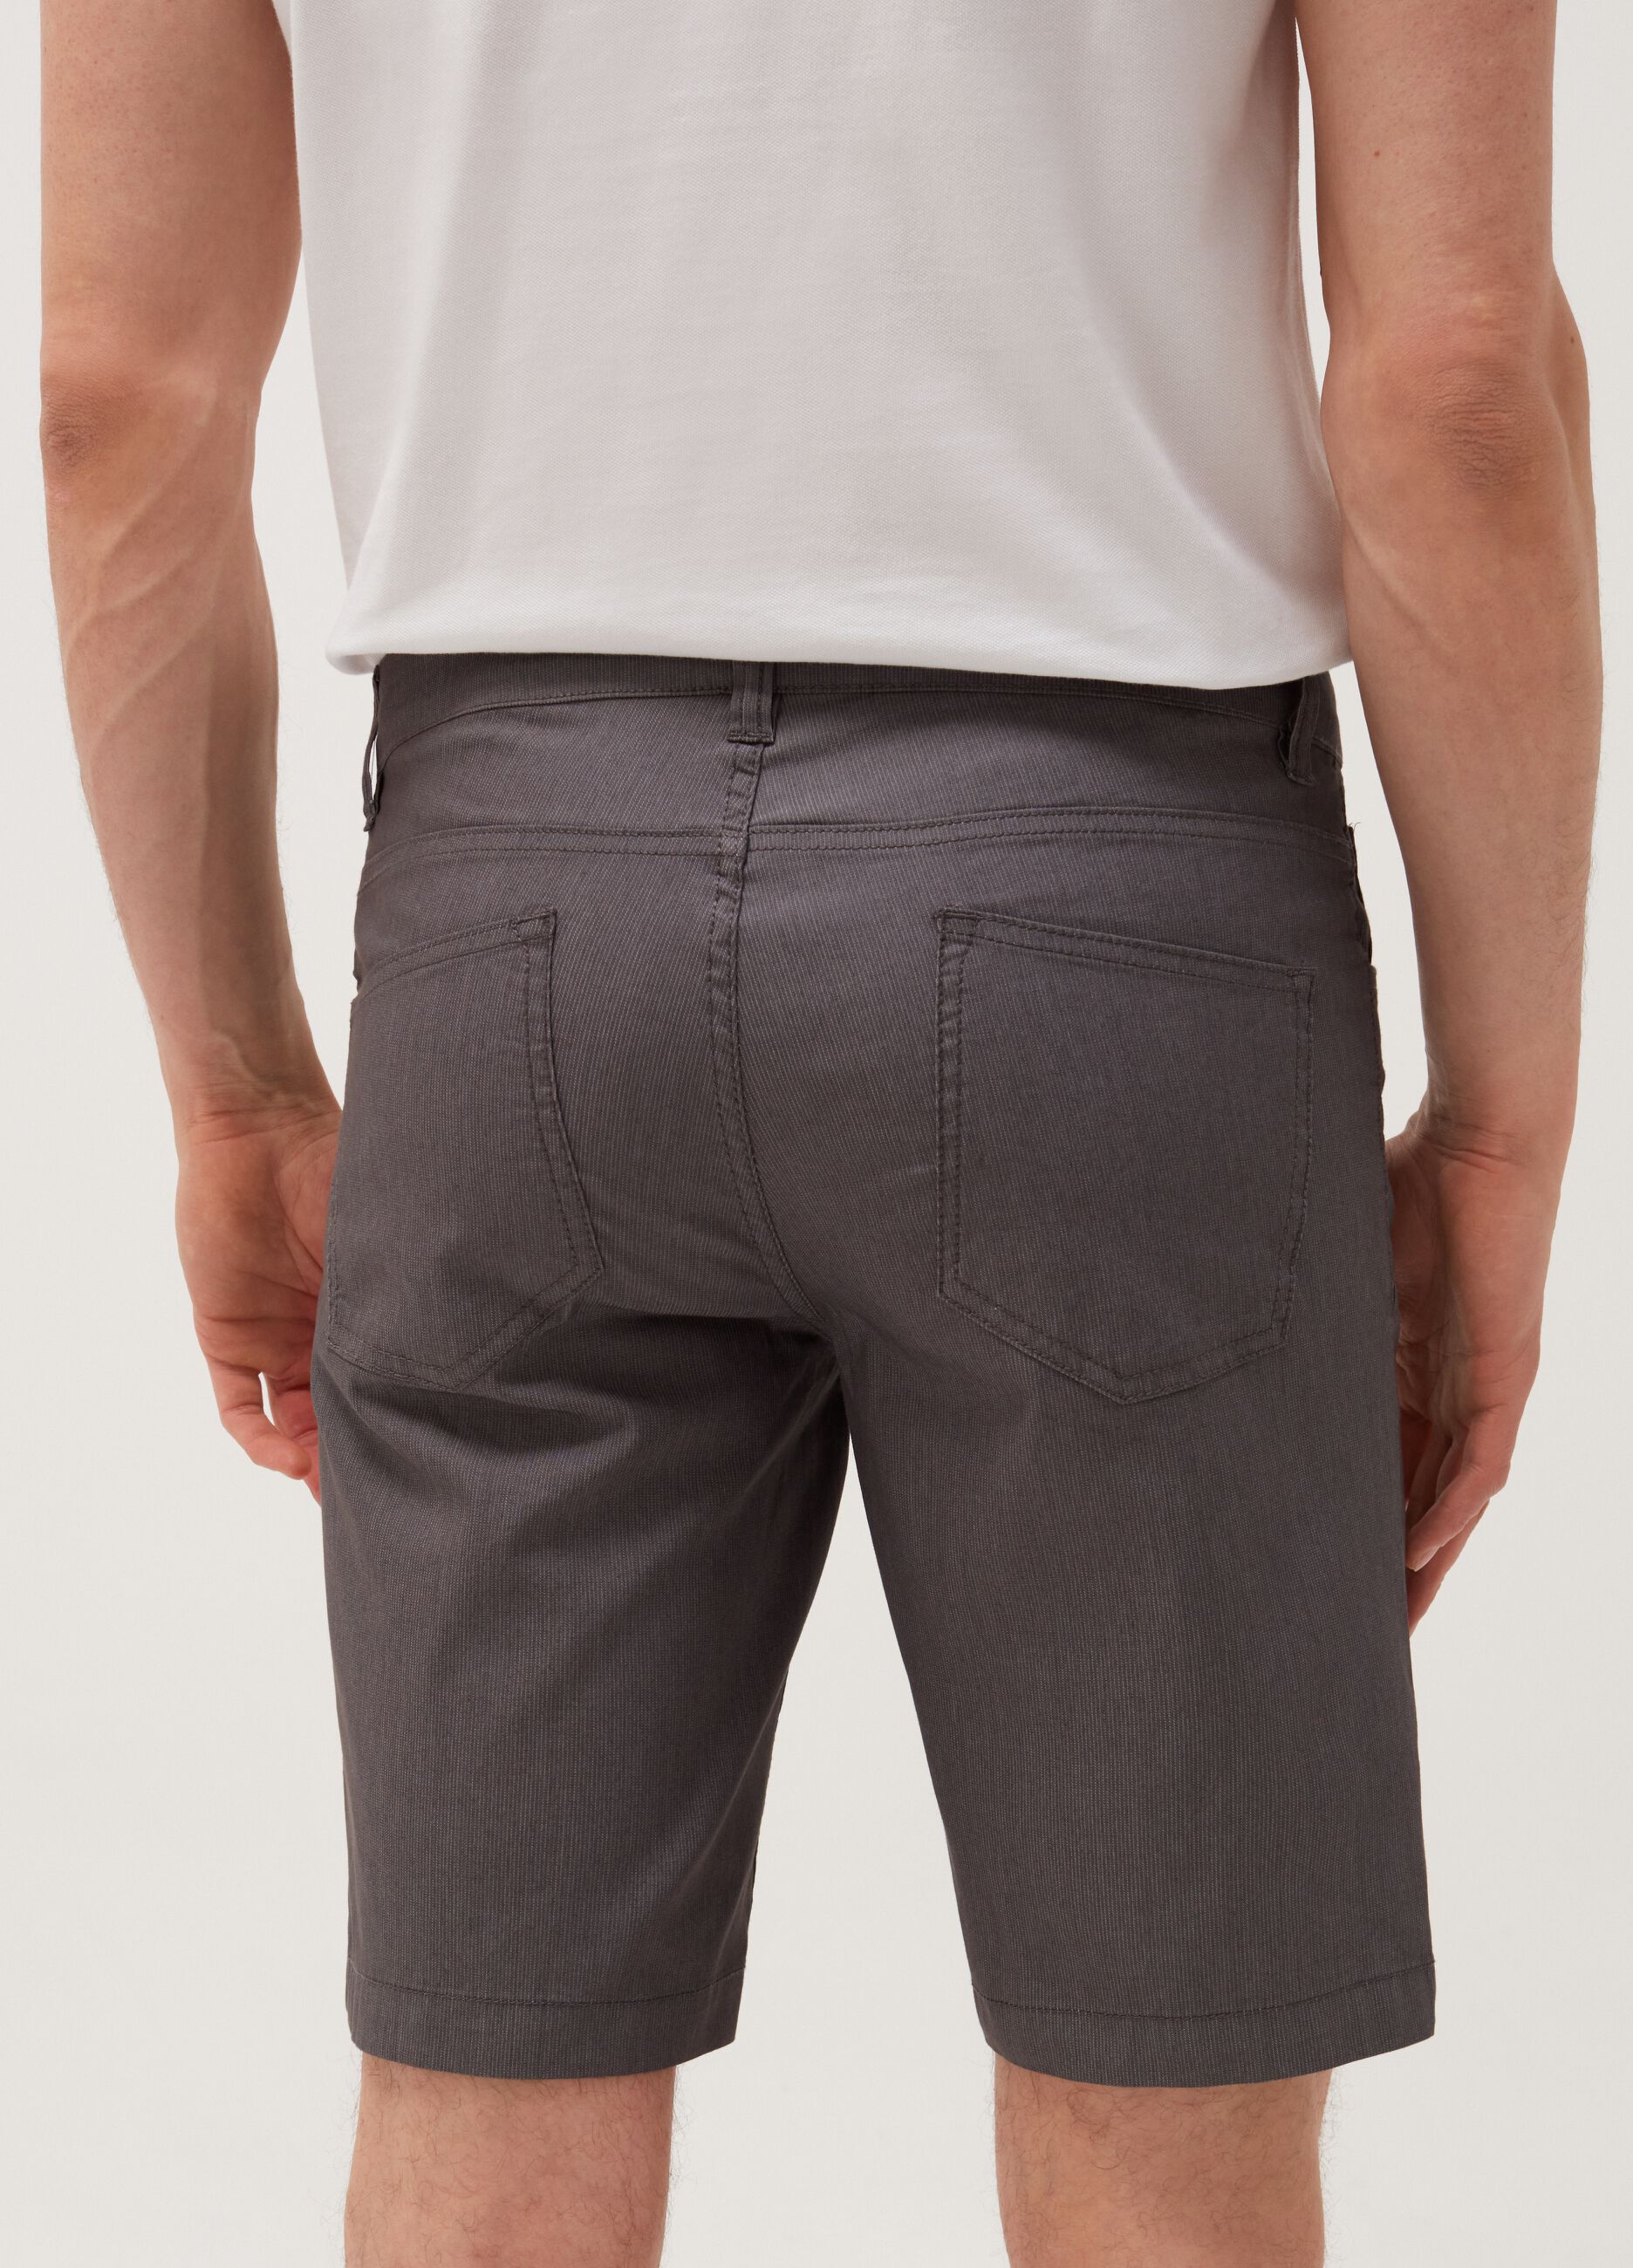 Five-pocket striped Bermuda shorts